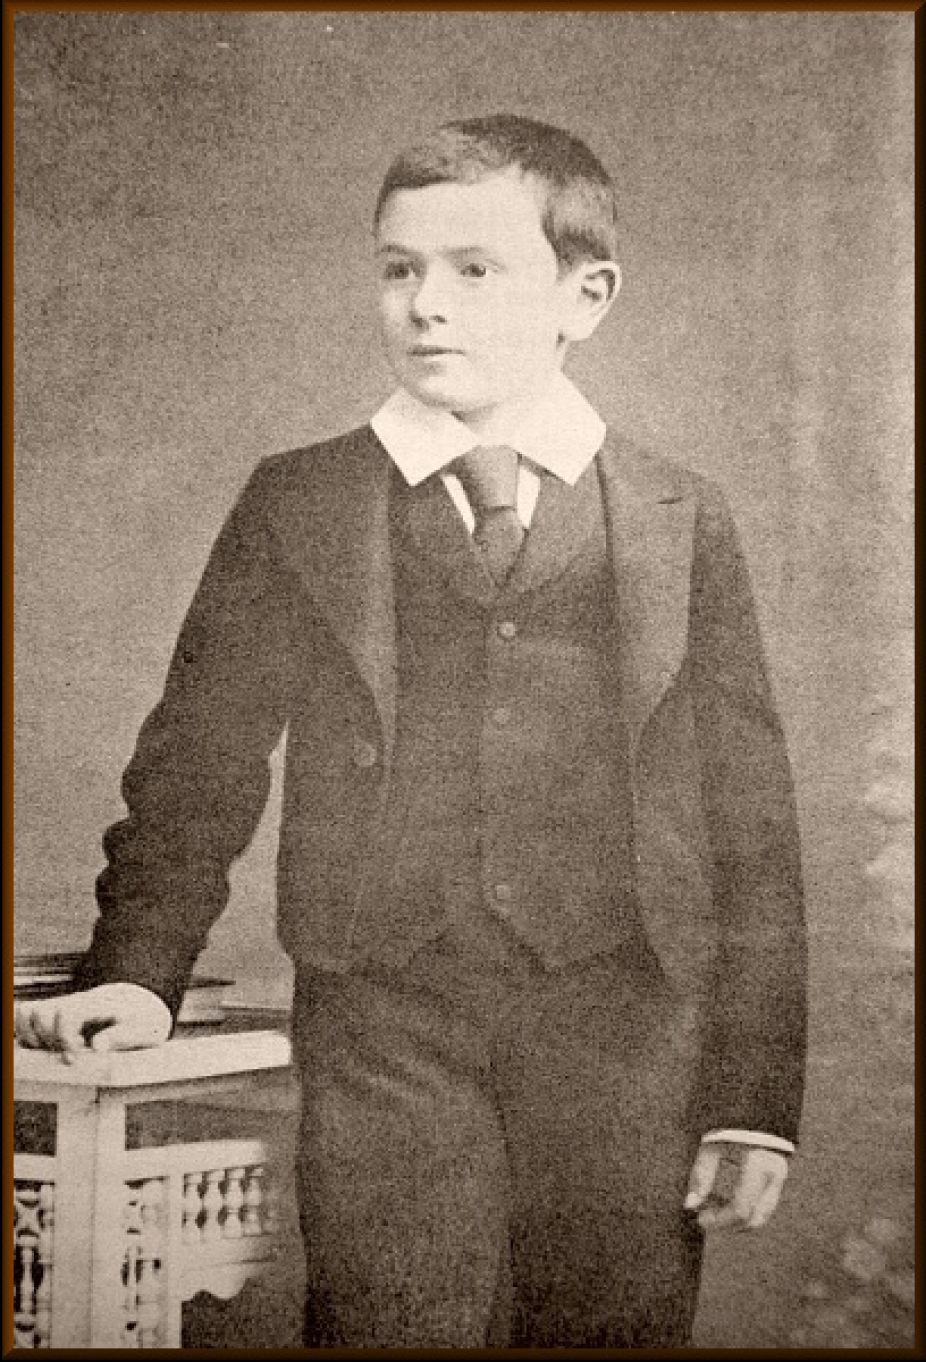 Antonín Dvořák in his childhood years